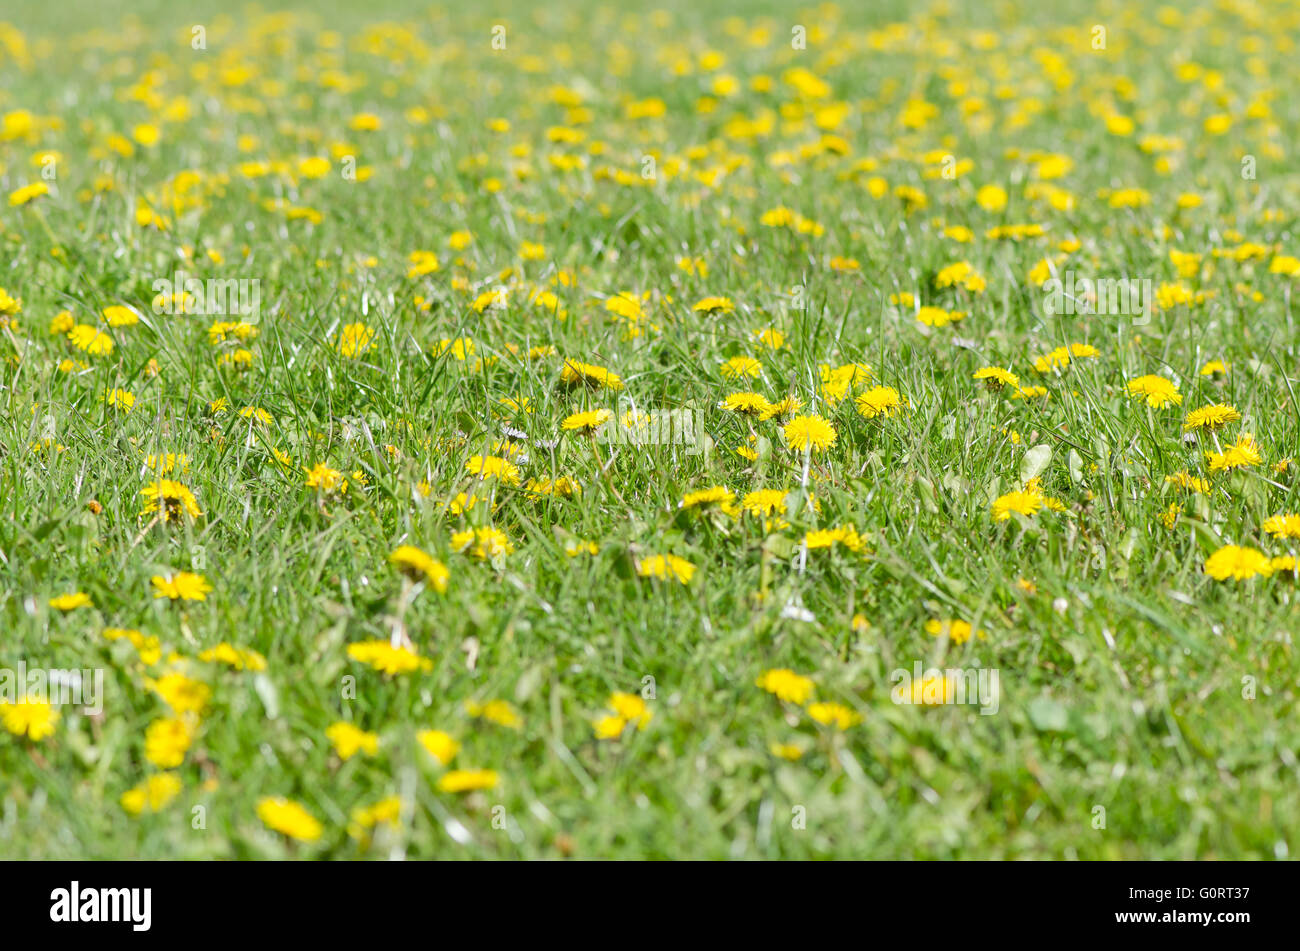 Field of dandelions (Taraxacum officinale) in flower. Abundant yellow flowers in a British meadow, amongst grass Stock Photo